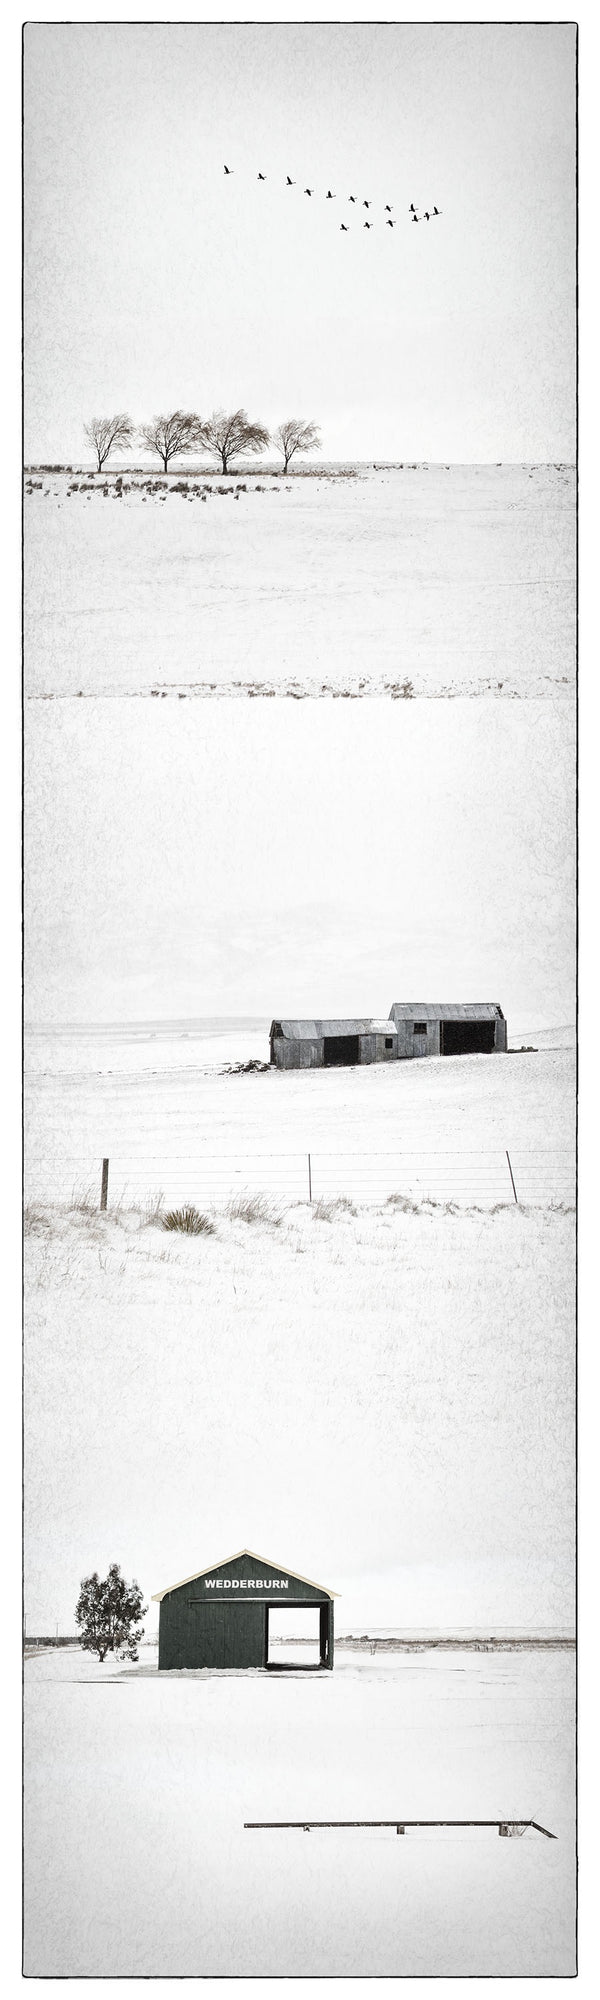 Unframed Photographic Print - Winter at Wedderburn